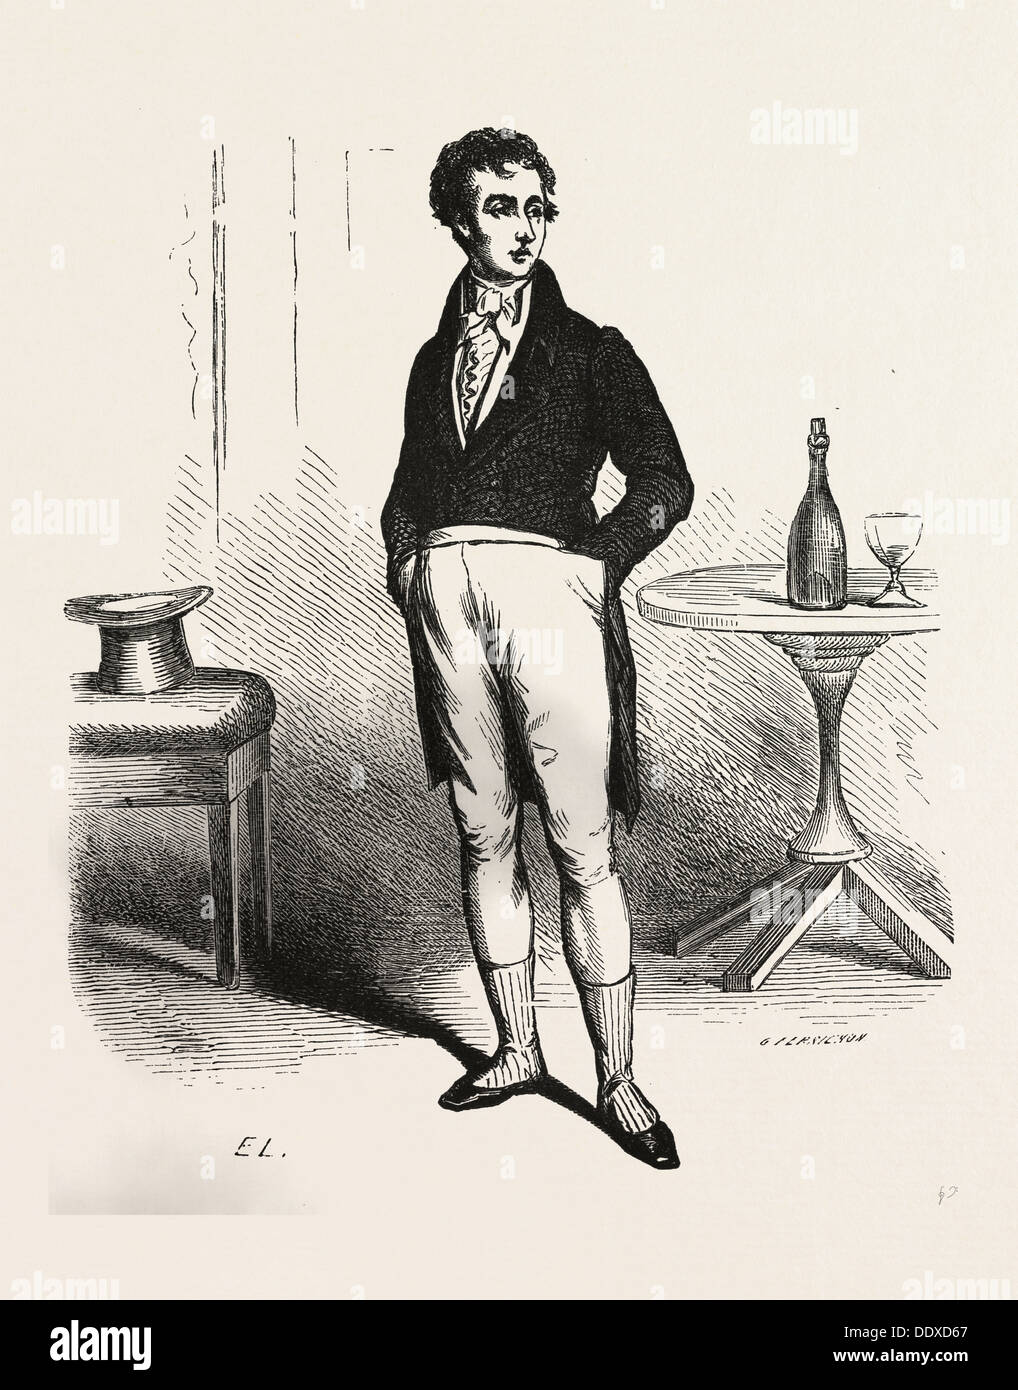 Francois Picaud, Alexandr Dumas, 19th century, liszt gourmet archive, bottle, glass, table, man, hat Stock Photo